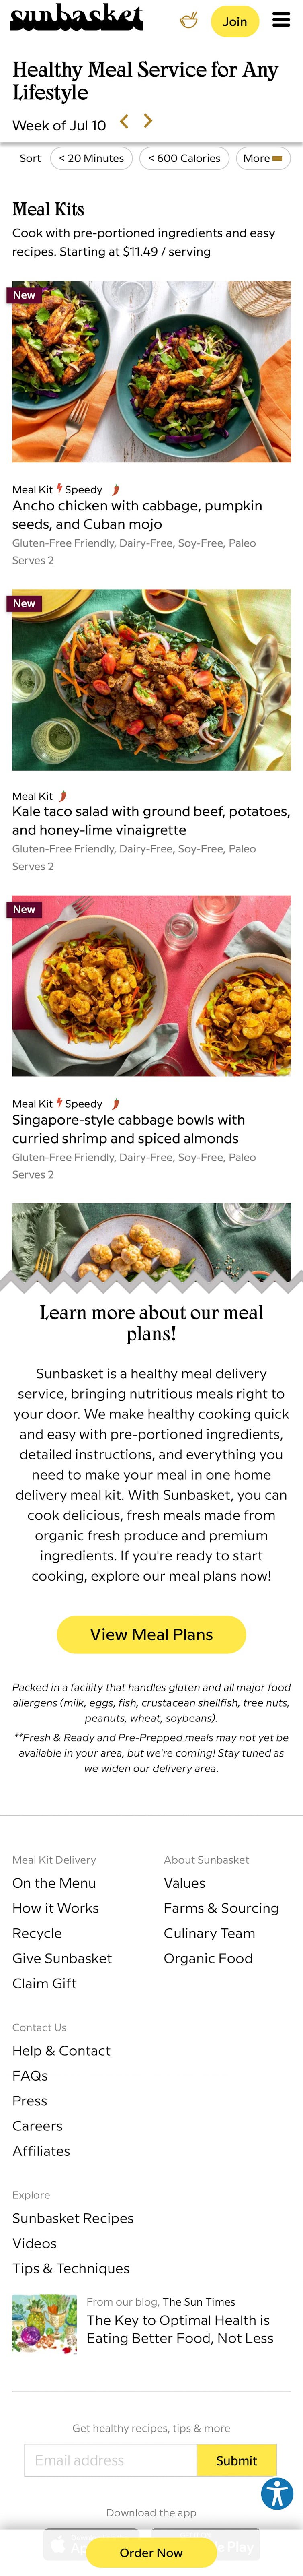 Mobile screenshot of Sunbasket